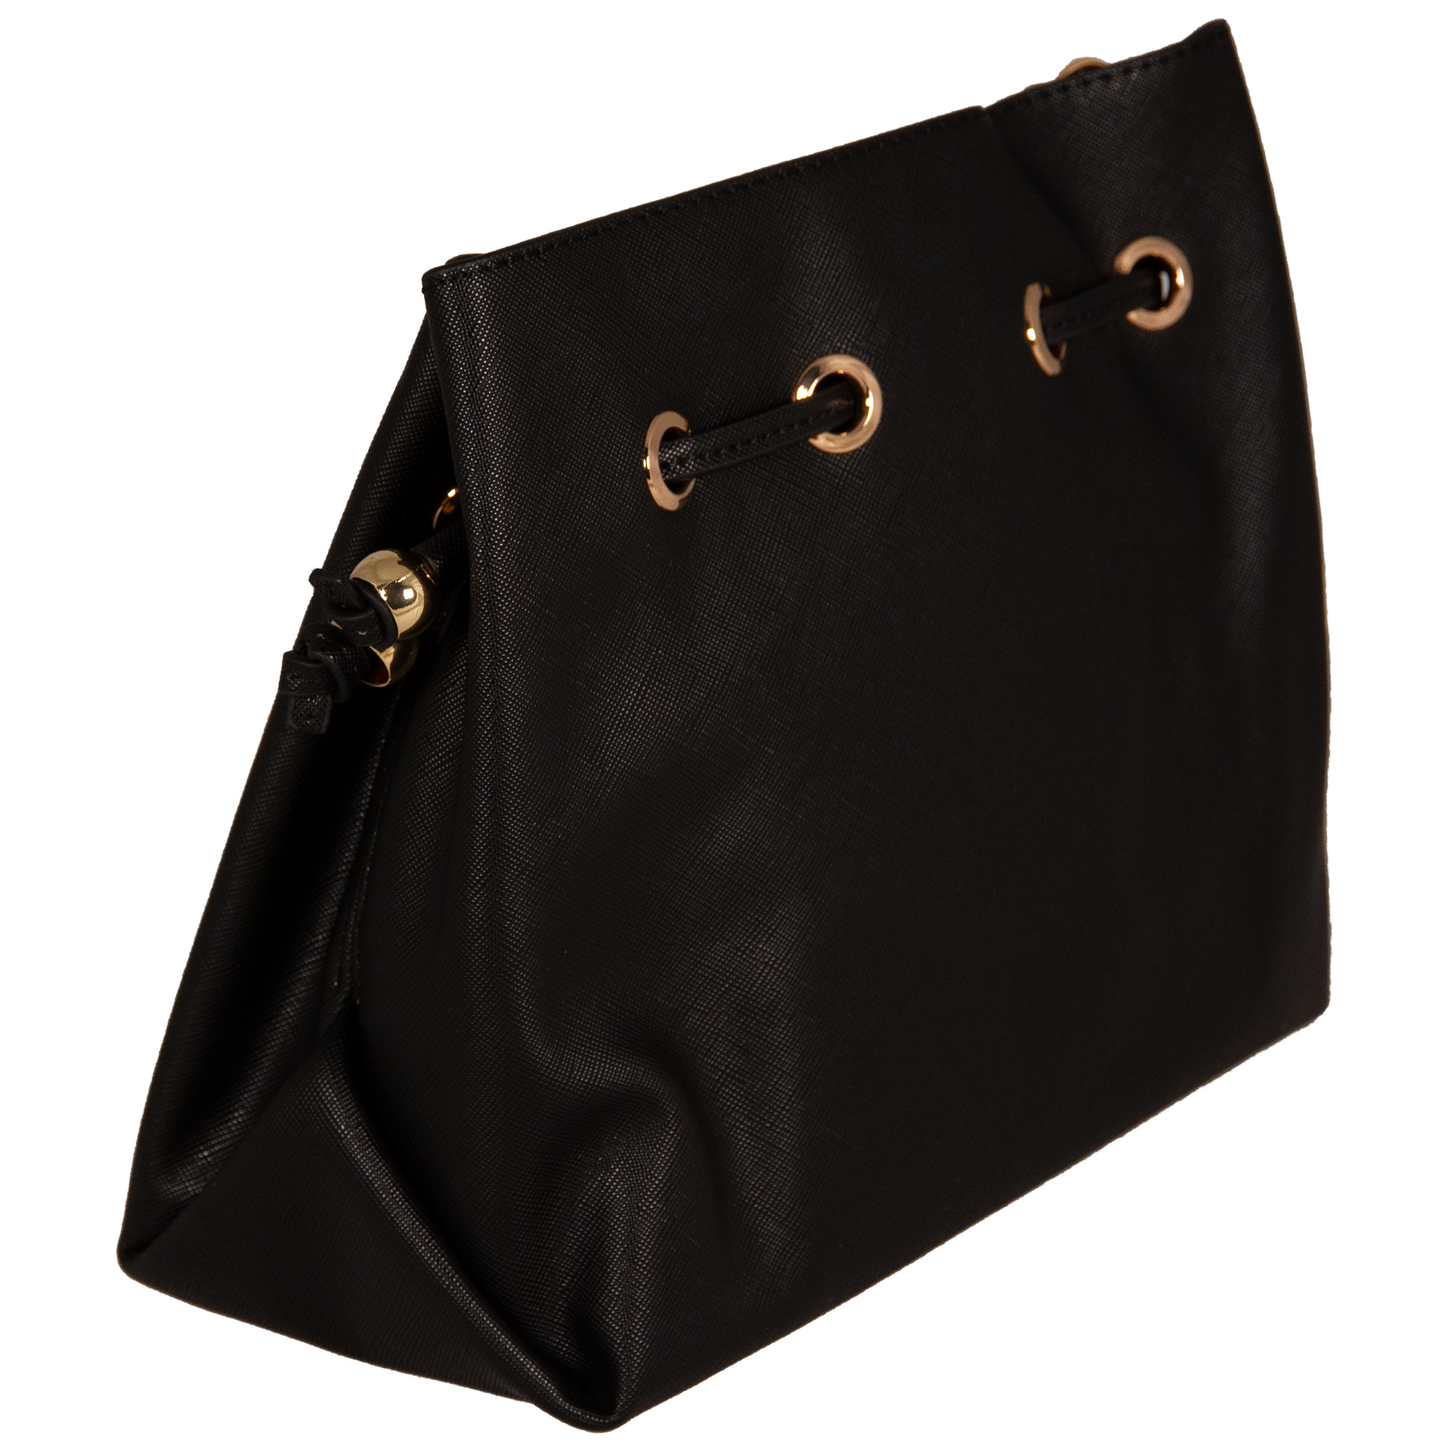 ONMZ Women's Tote Handbag - Black